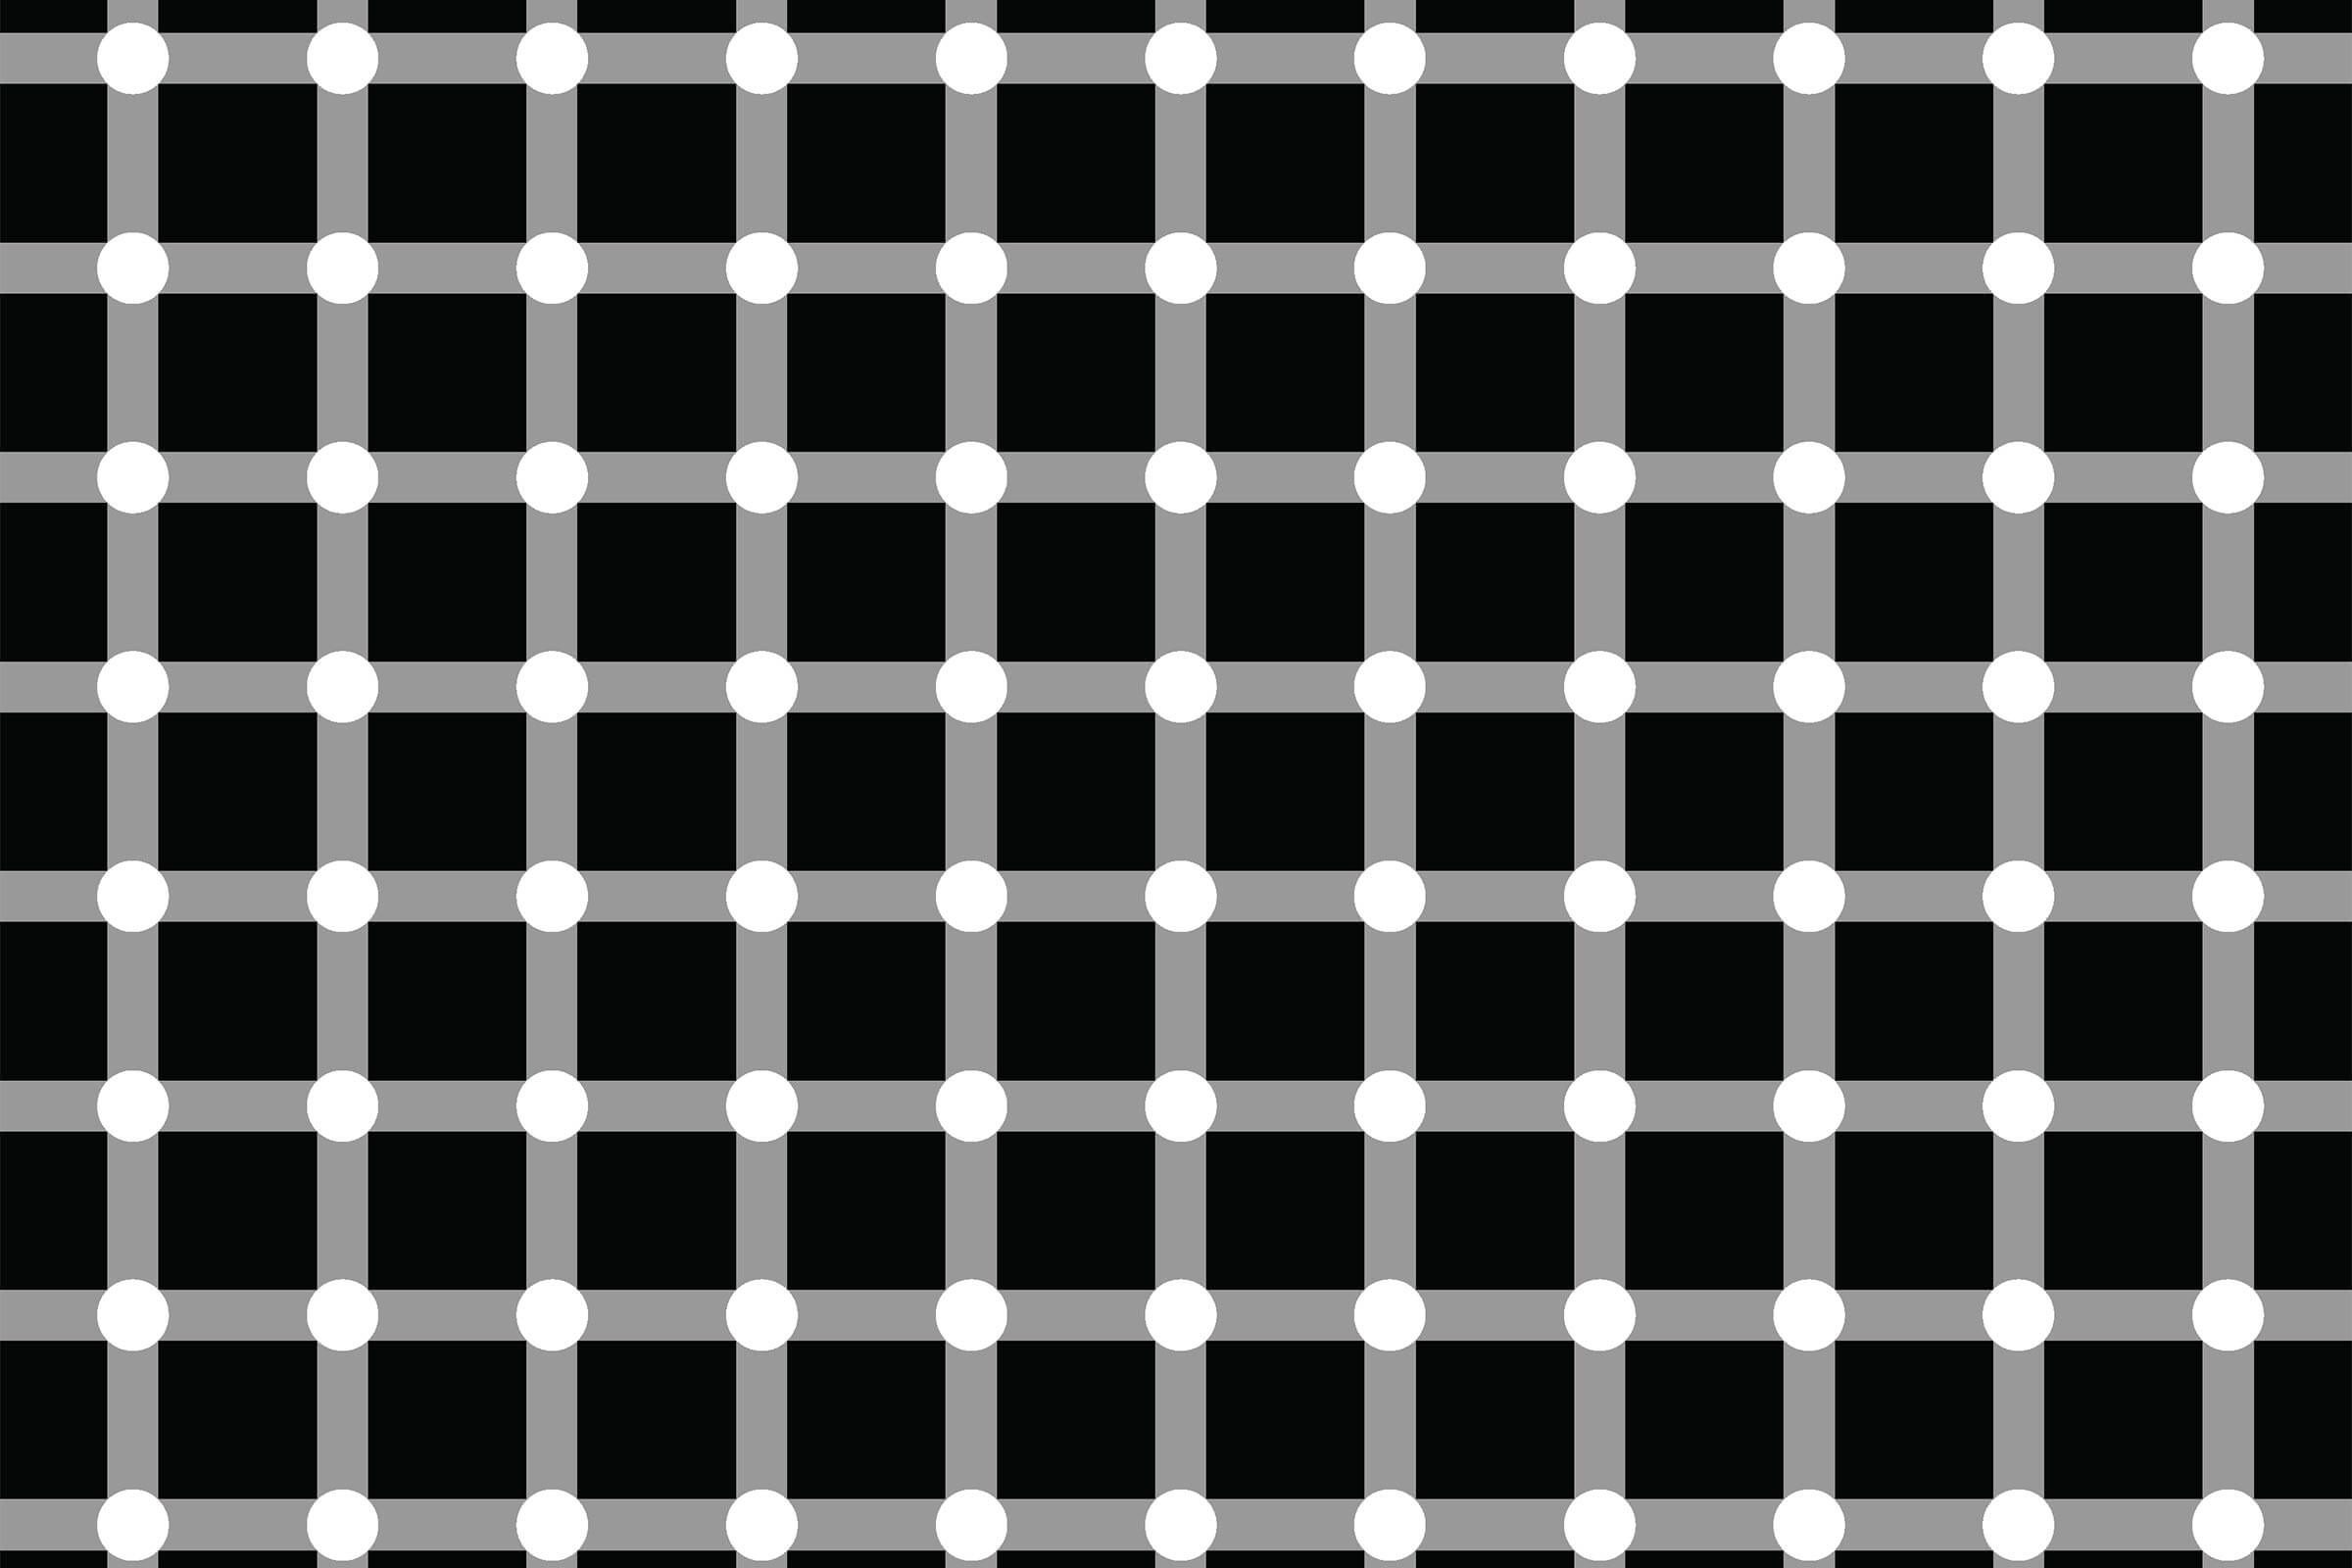 Do Not Adjust Your Set  Optical illusion drawing, Optical illusions  drawings, Cool optical illusions